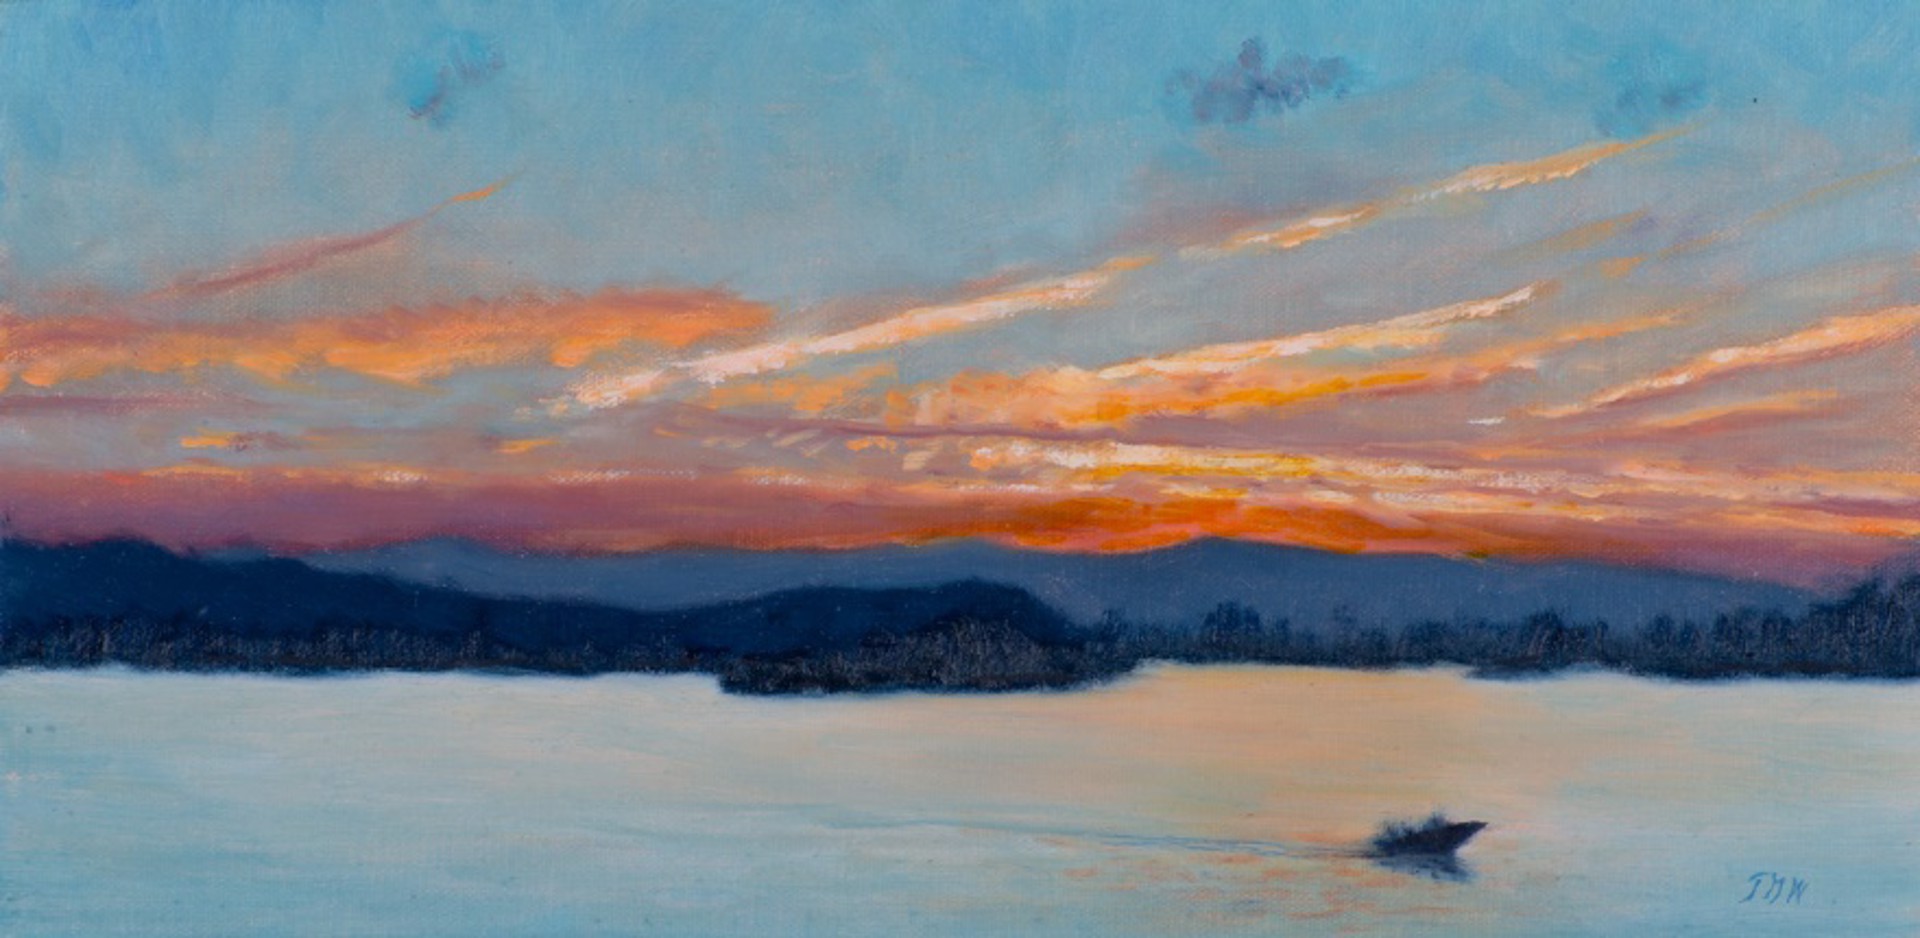 Sunset on the Lake by Teresa Garland Warner